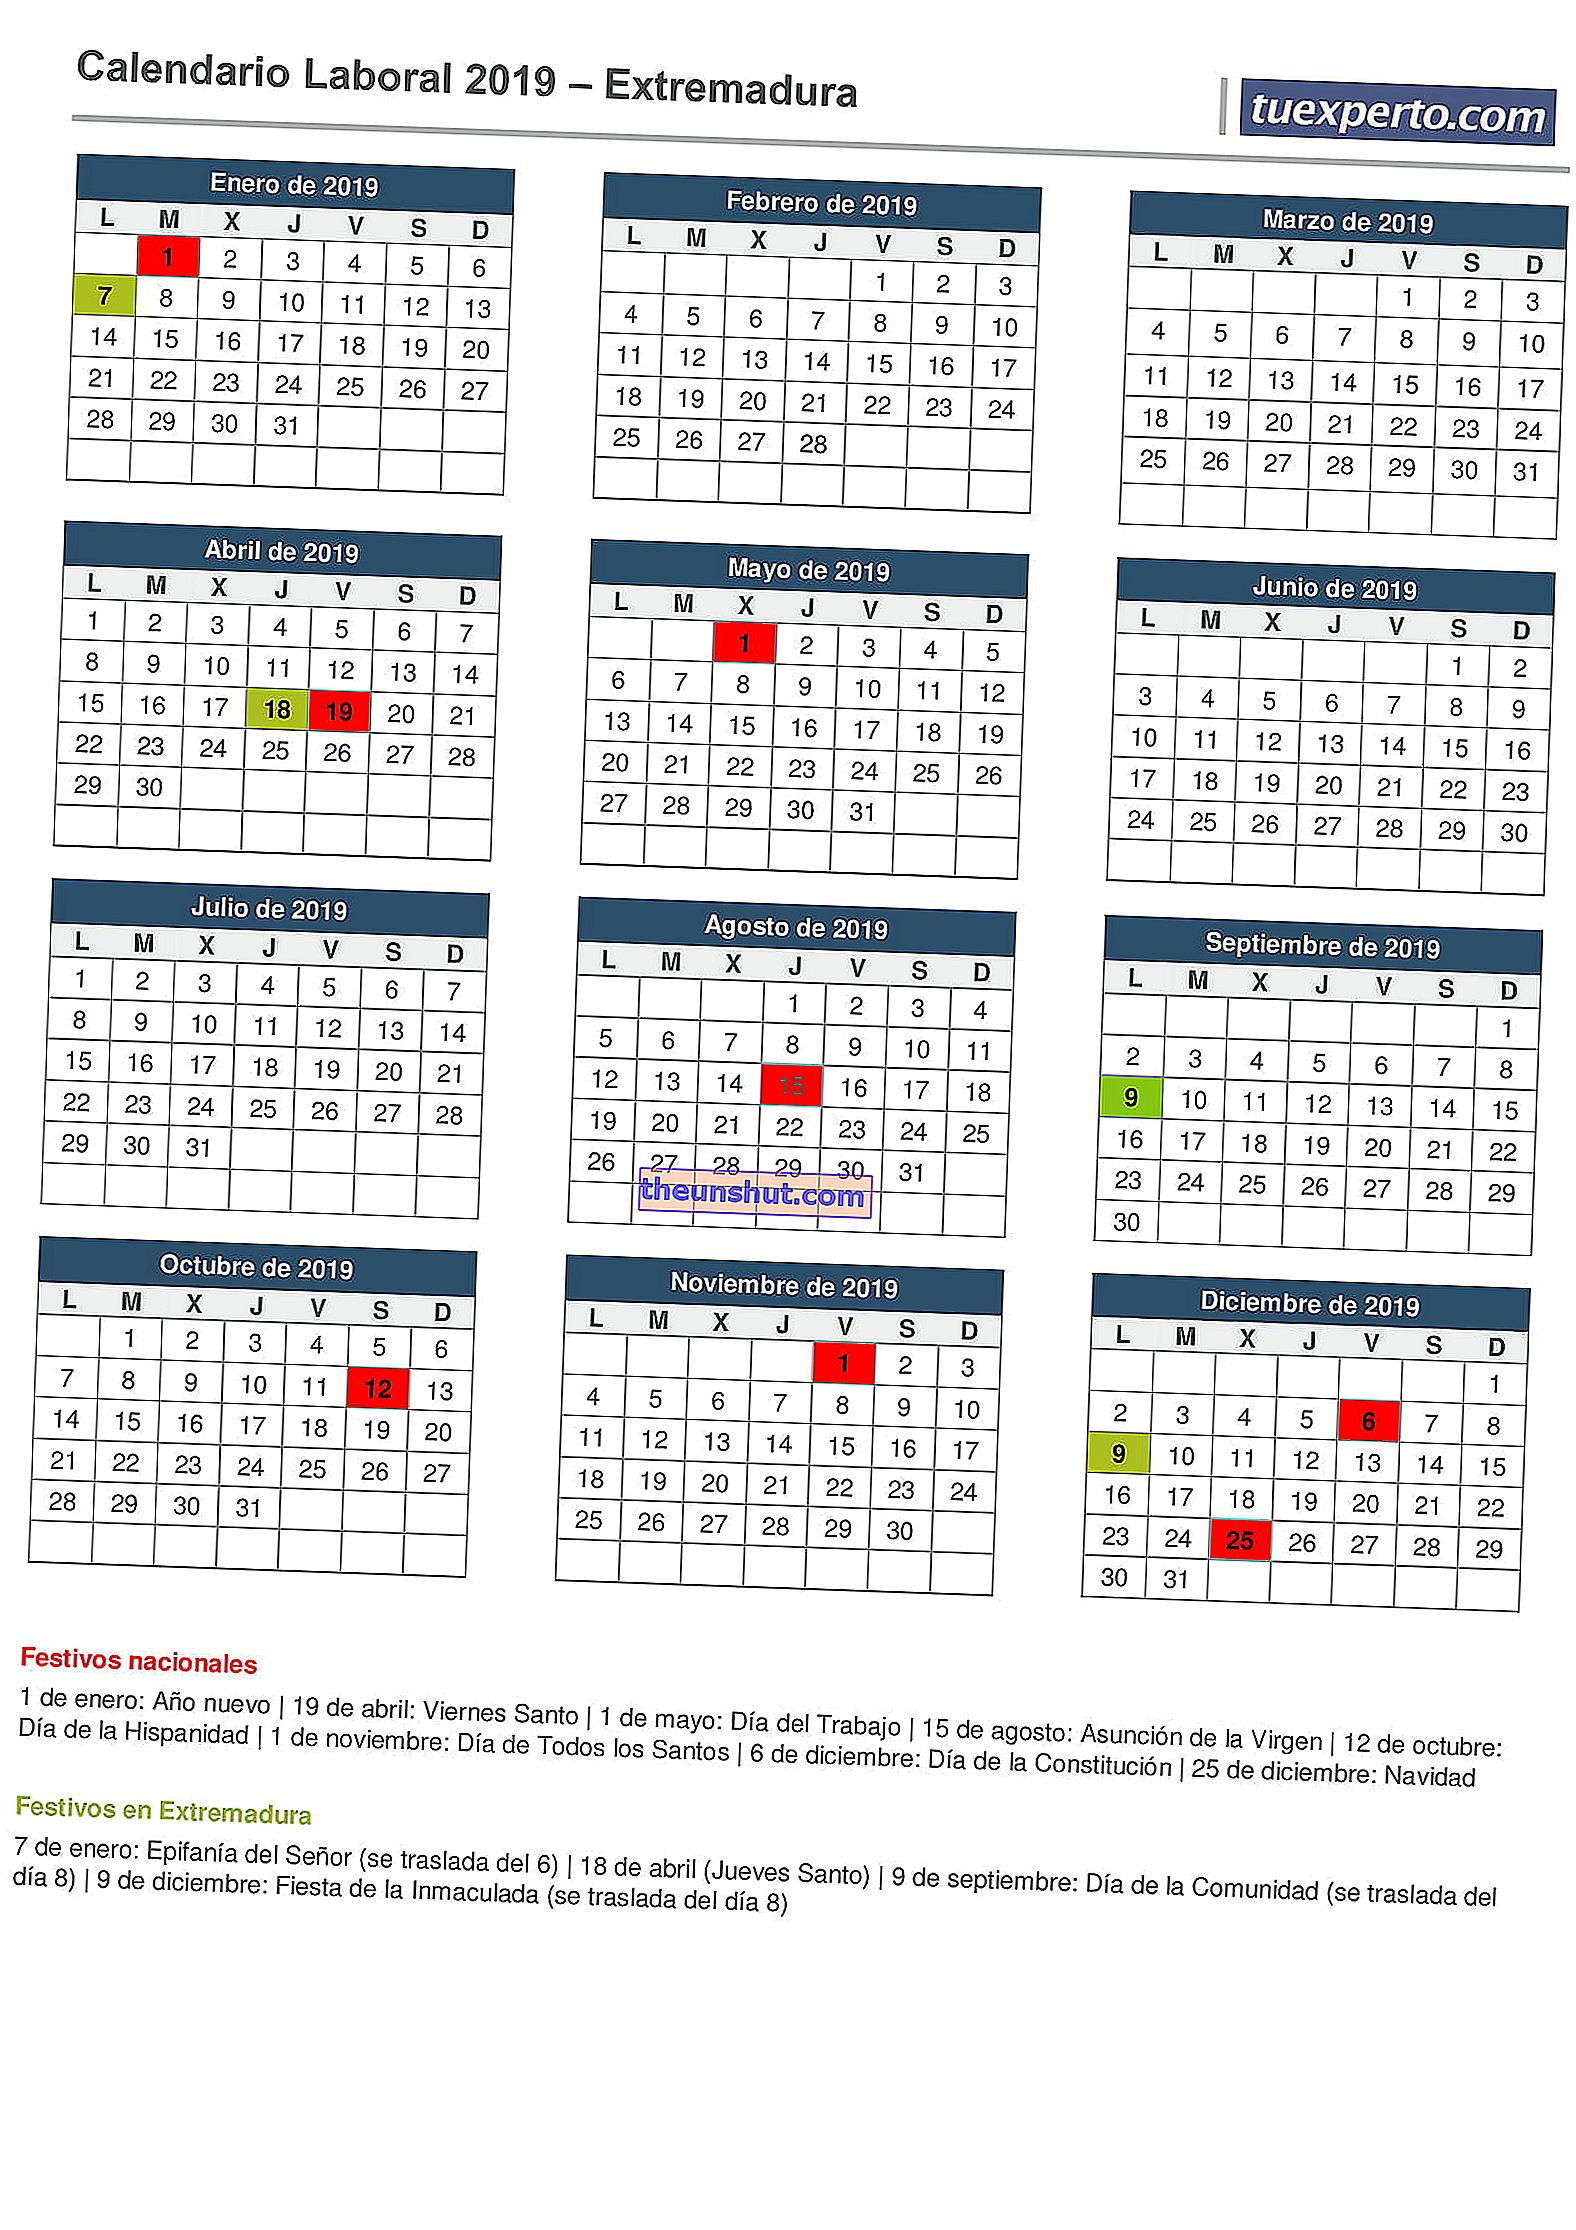 calendario del lavoro estremadura 2019